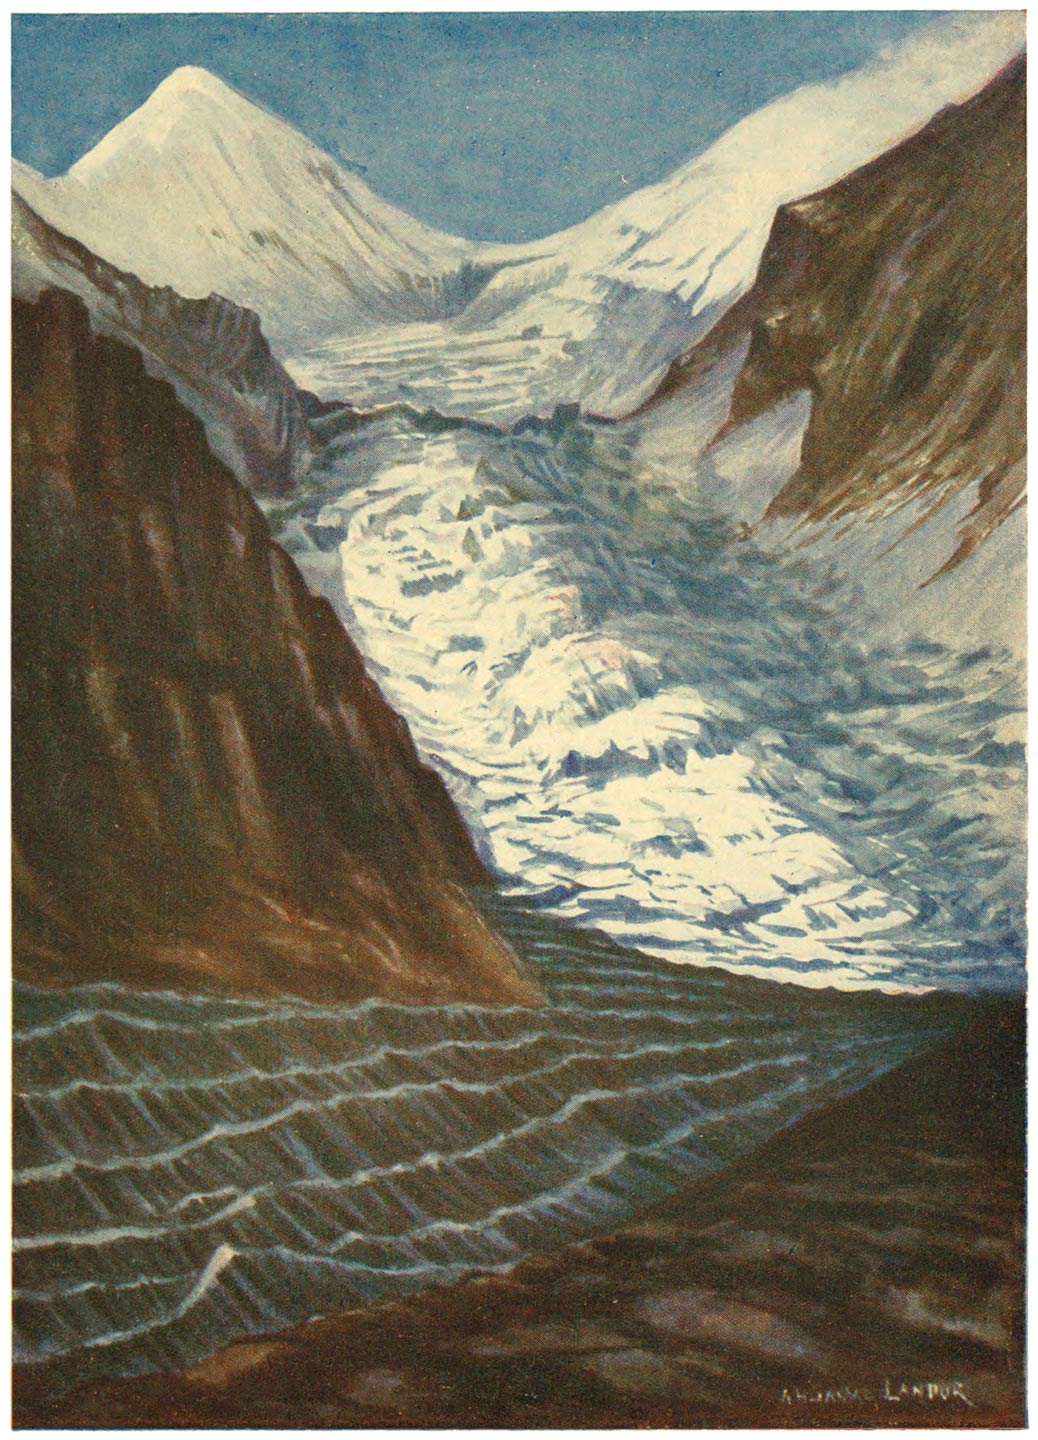 The Armida Landor Glacier, Nepal